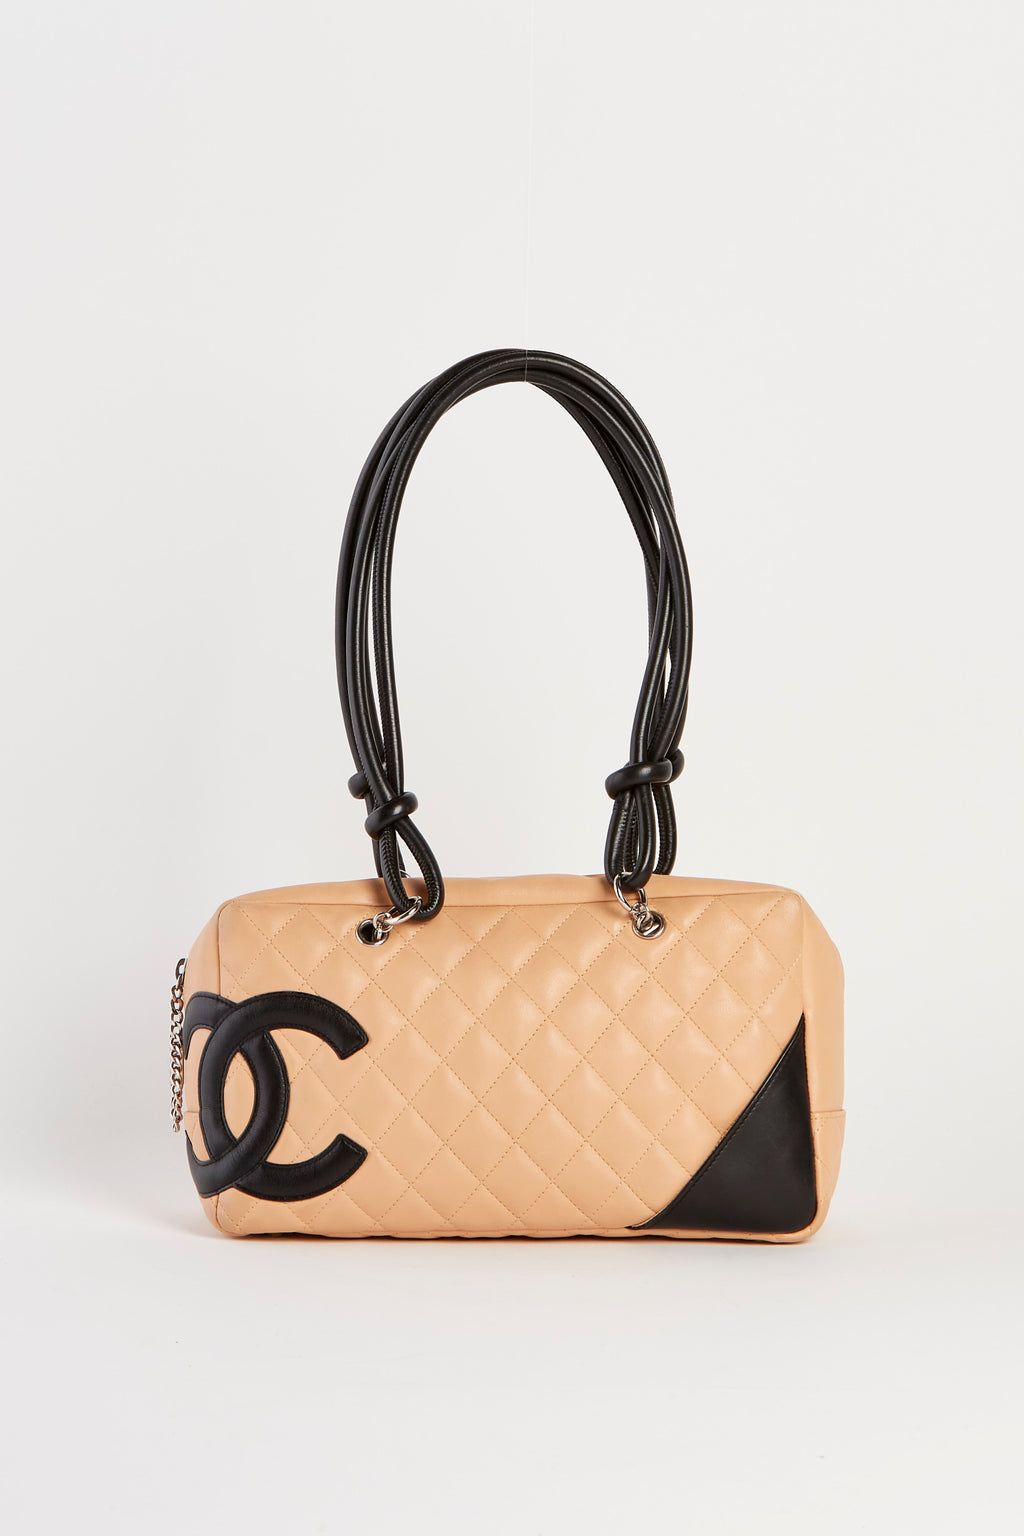 2000s Chanel Rue Cambon Beige Shoulder Bag